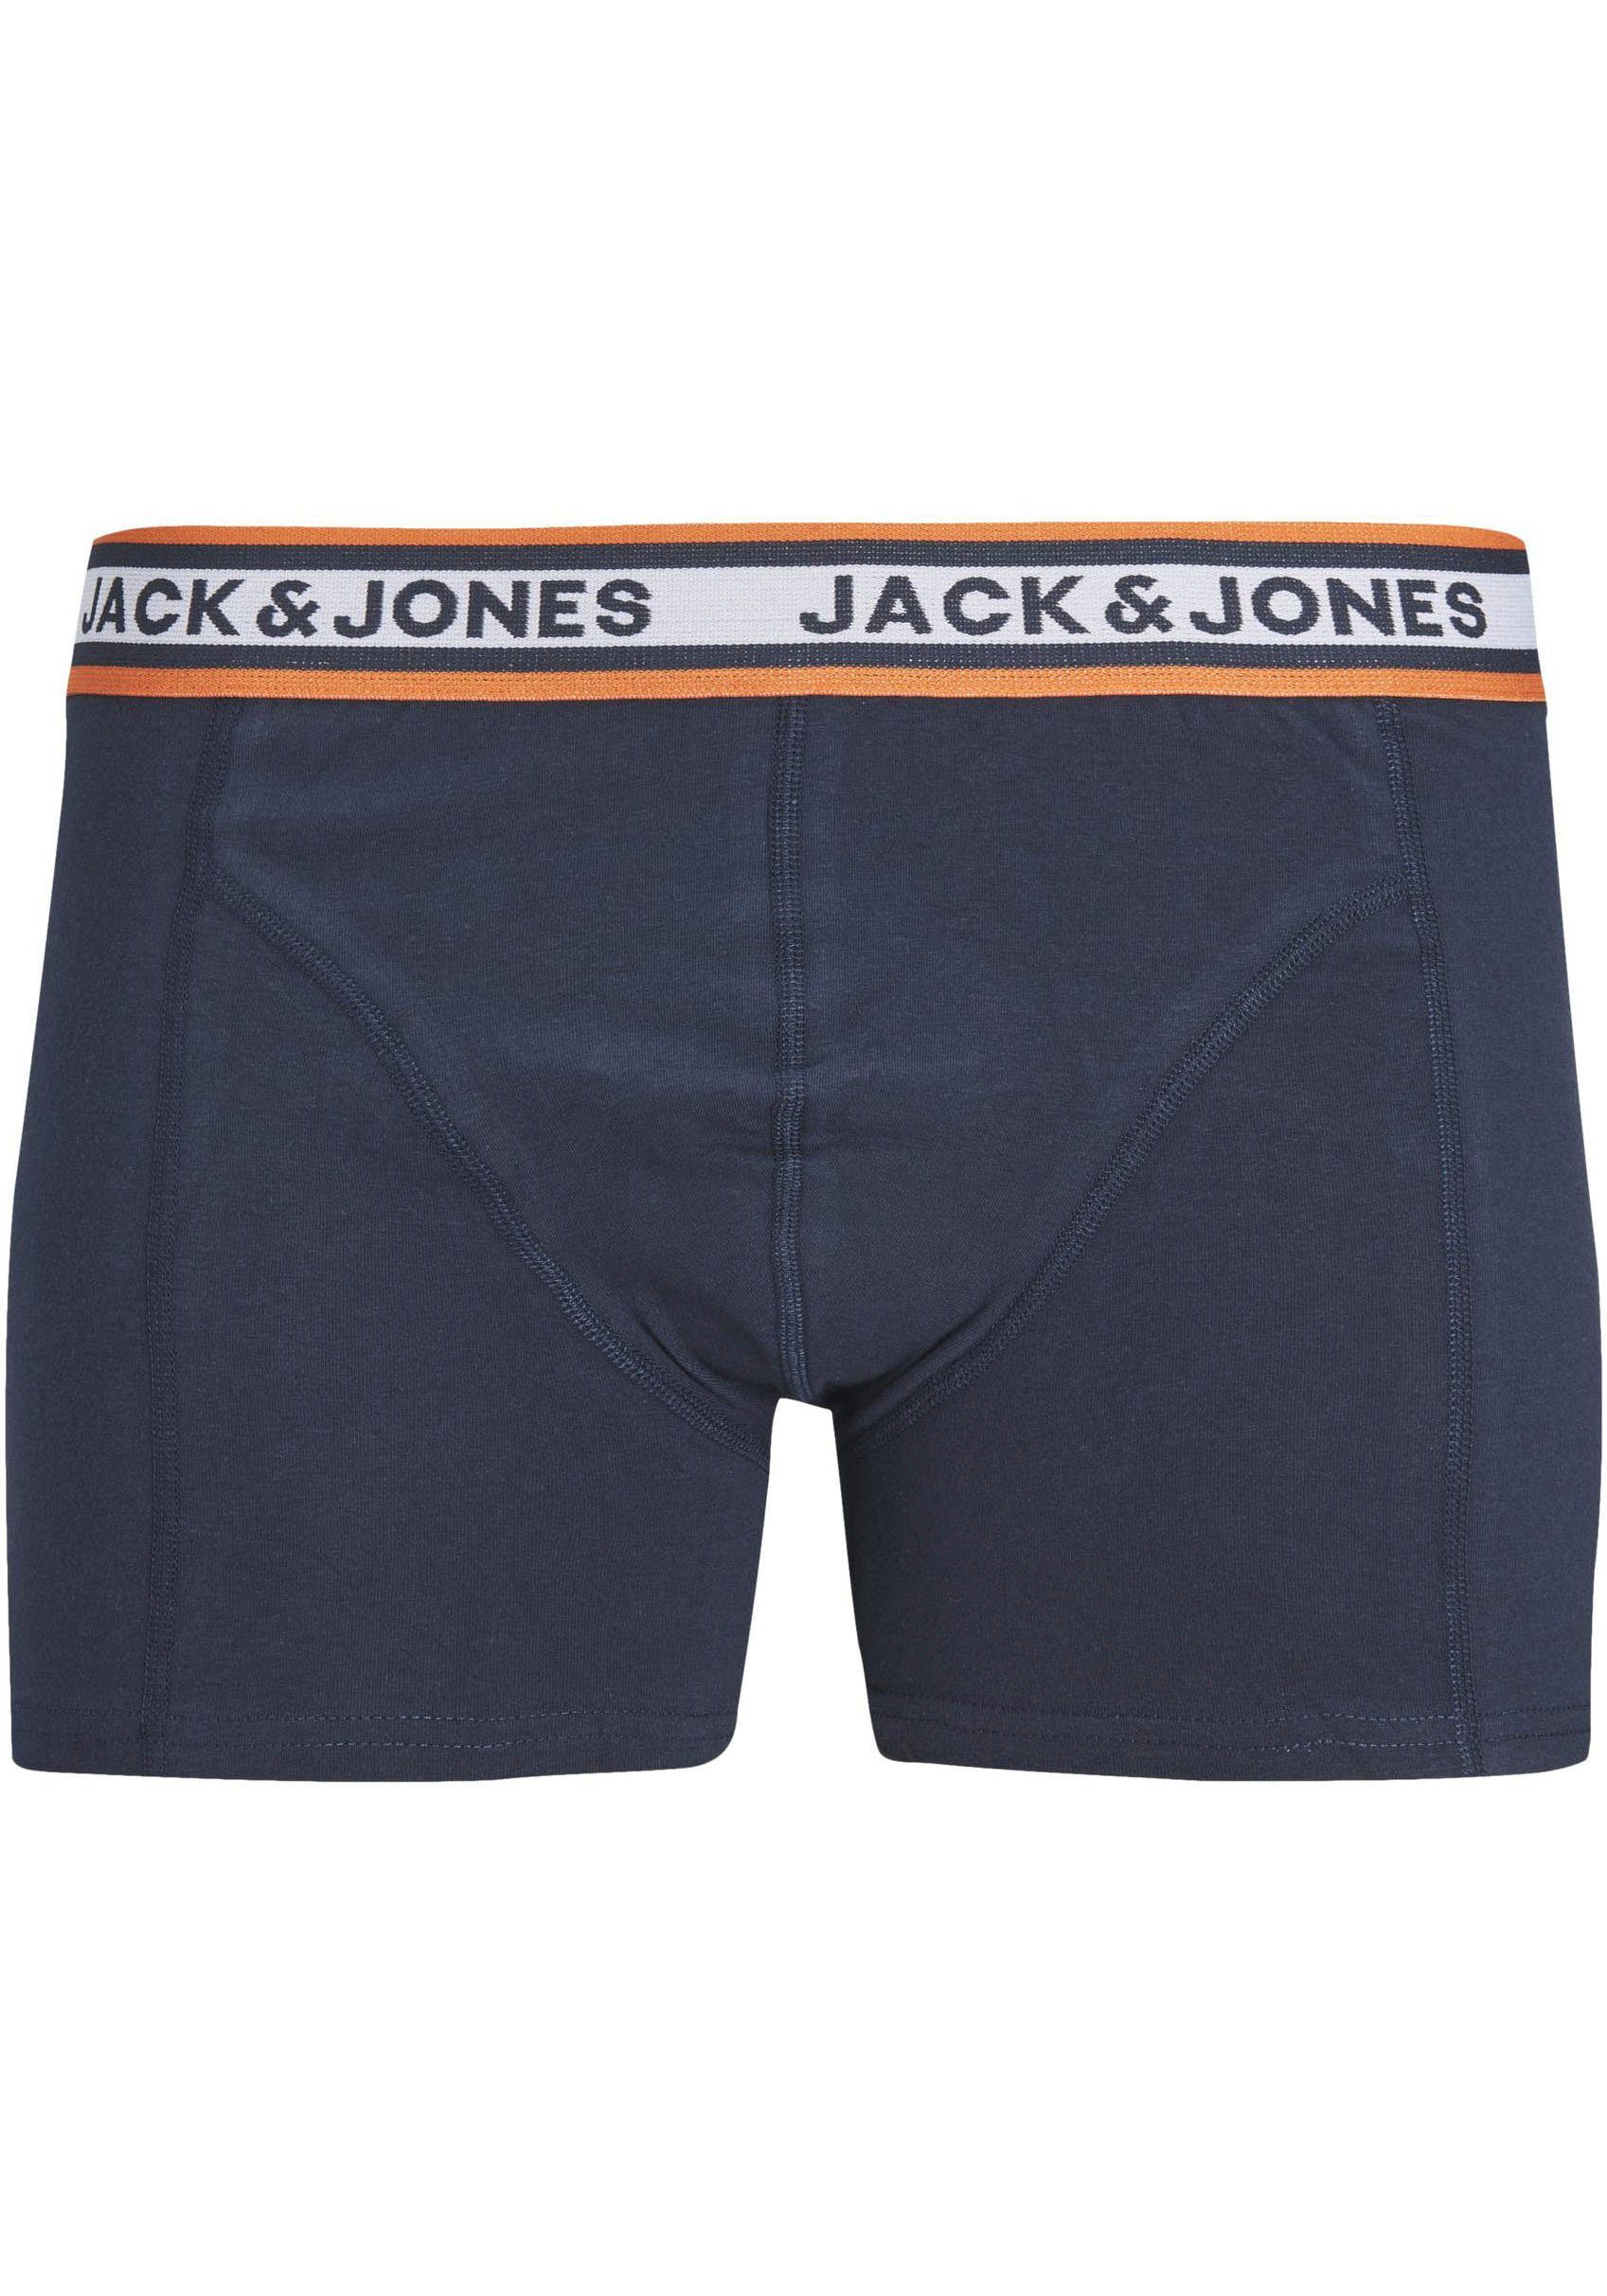 Jack & Jones Trunk navy 3-St) / (Packung, NOOS dgm exub TRUNKS / blazer PACK 3 JACMYLE